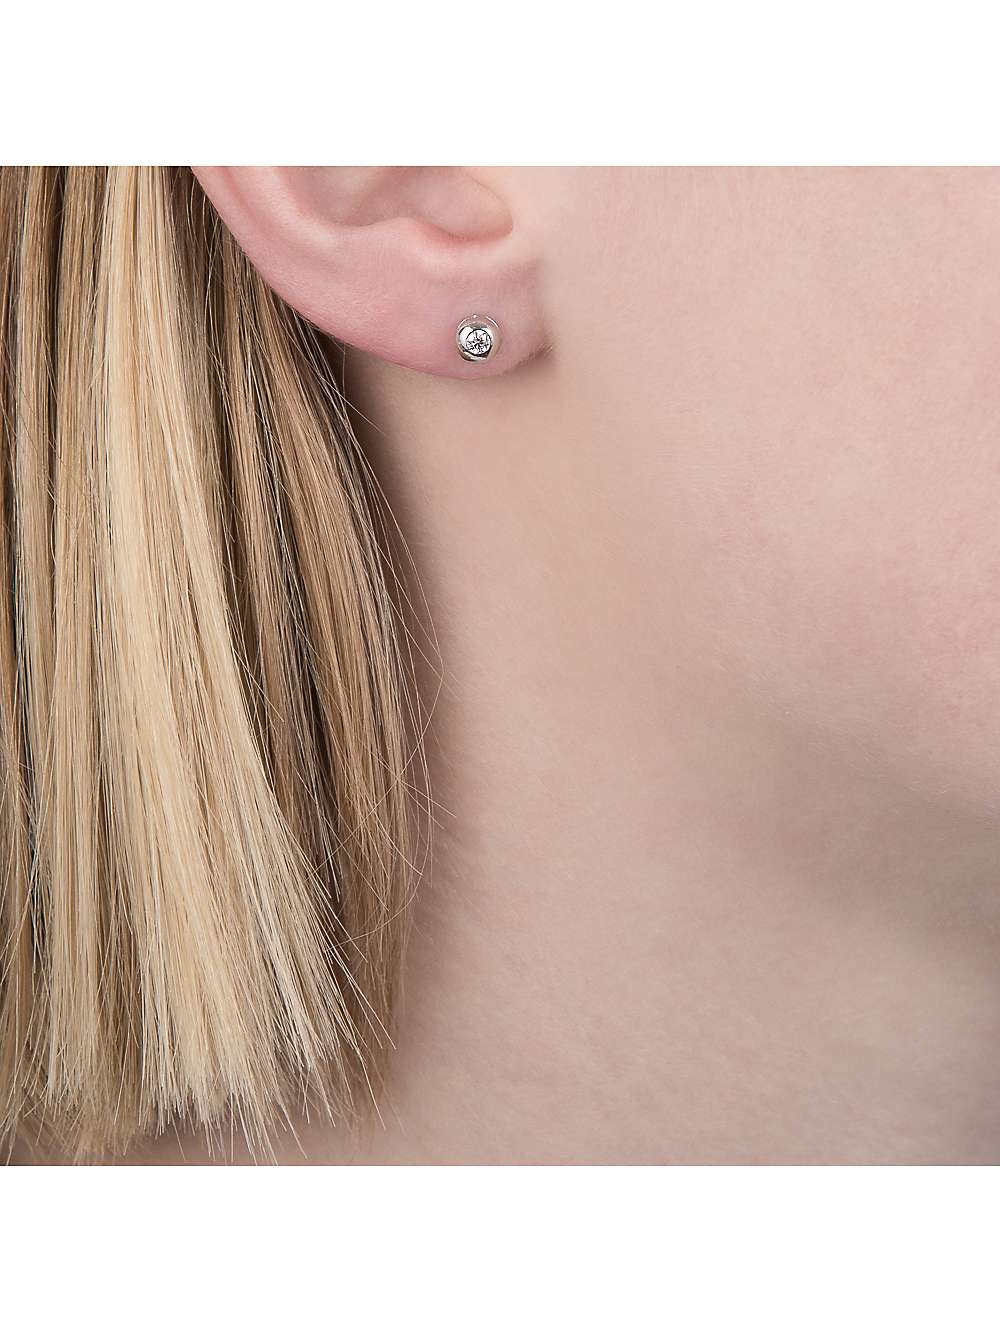 Buy E.W Adams 9ct White Gold Flush Set Diamond Stud Earrings Online at johnlewis.com